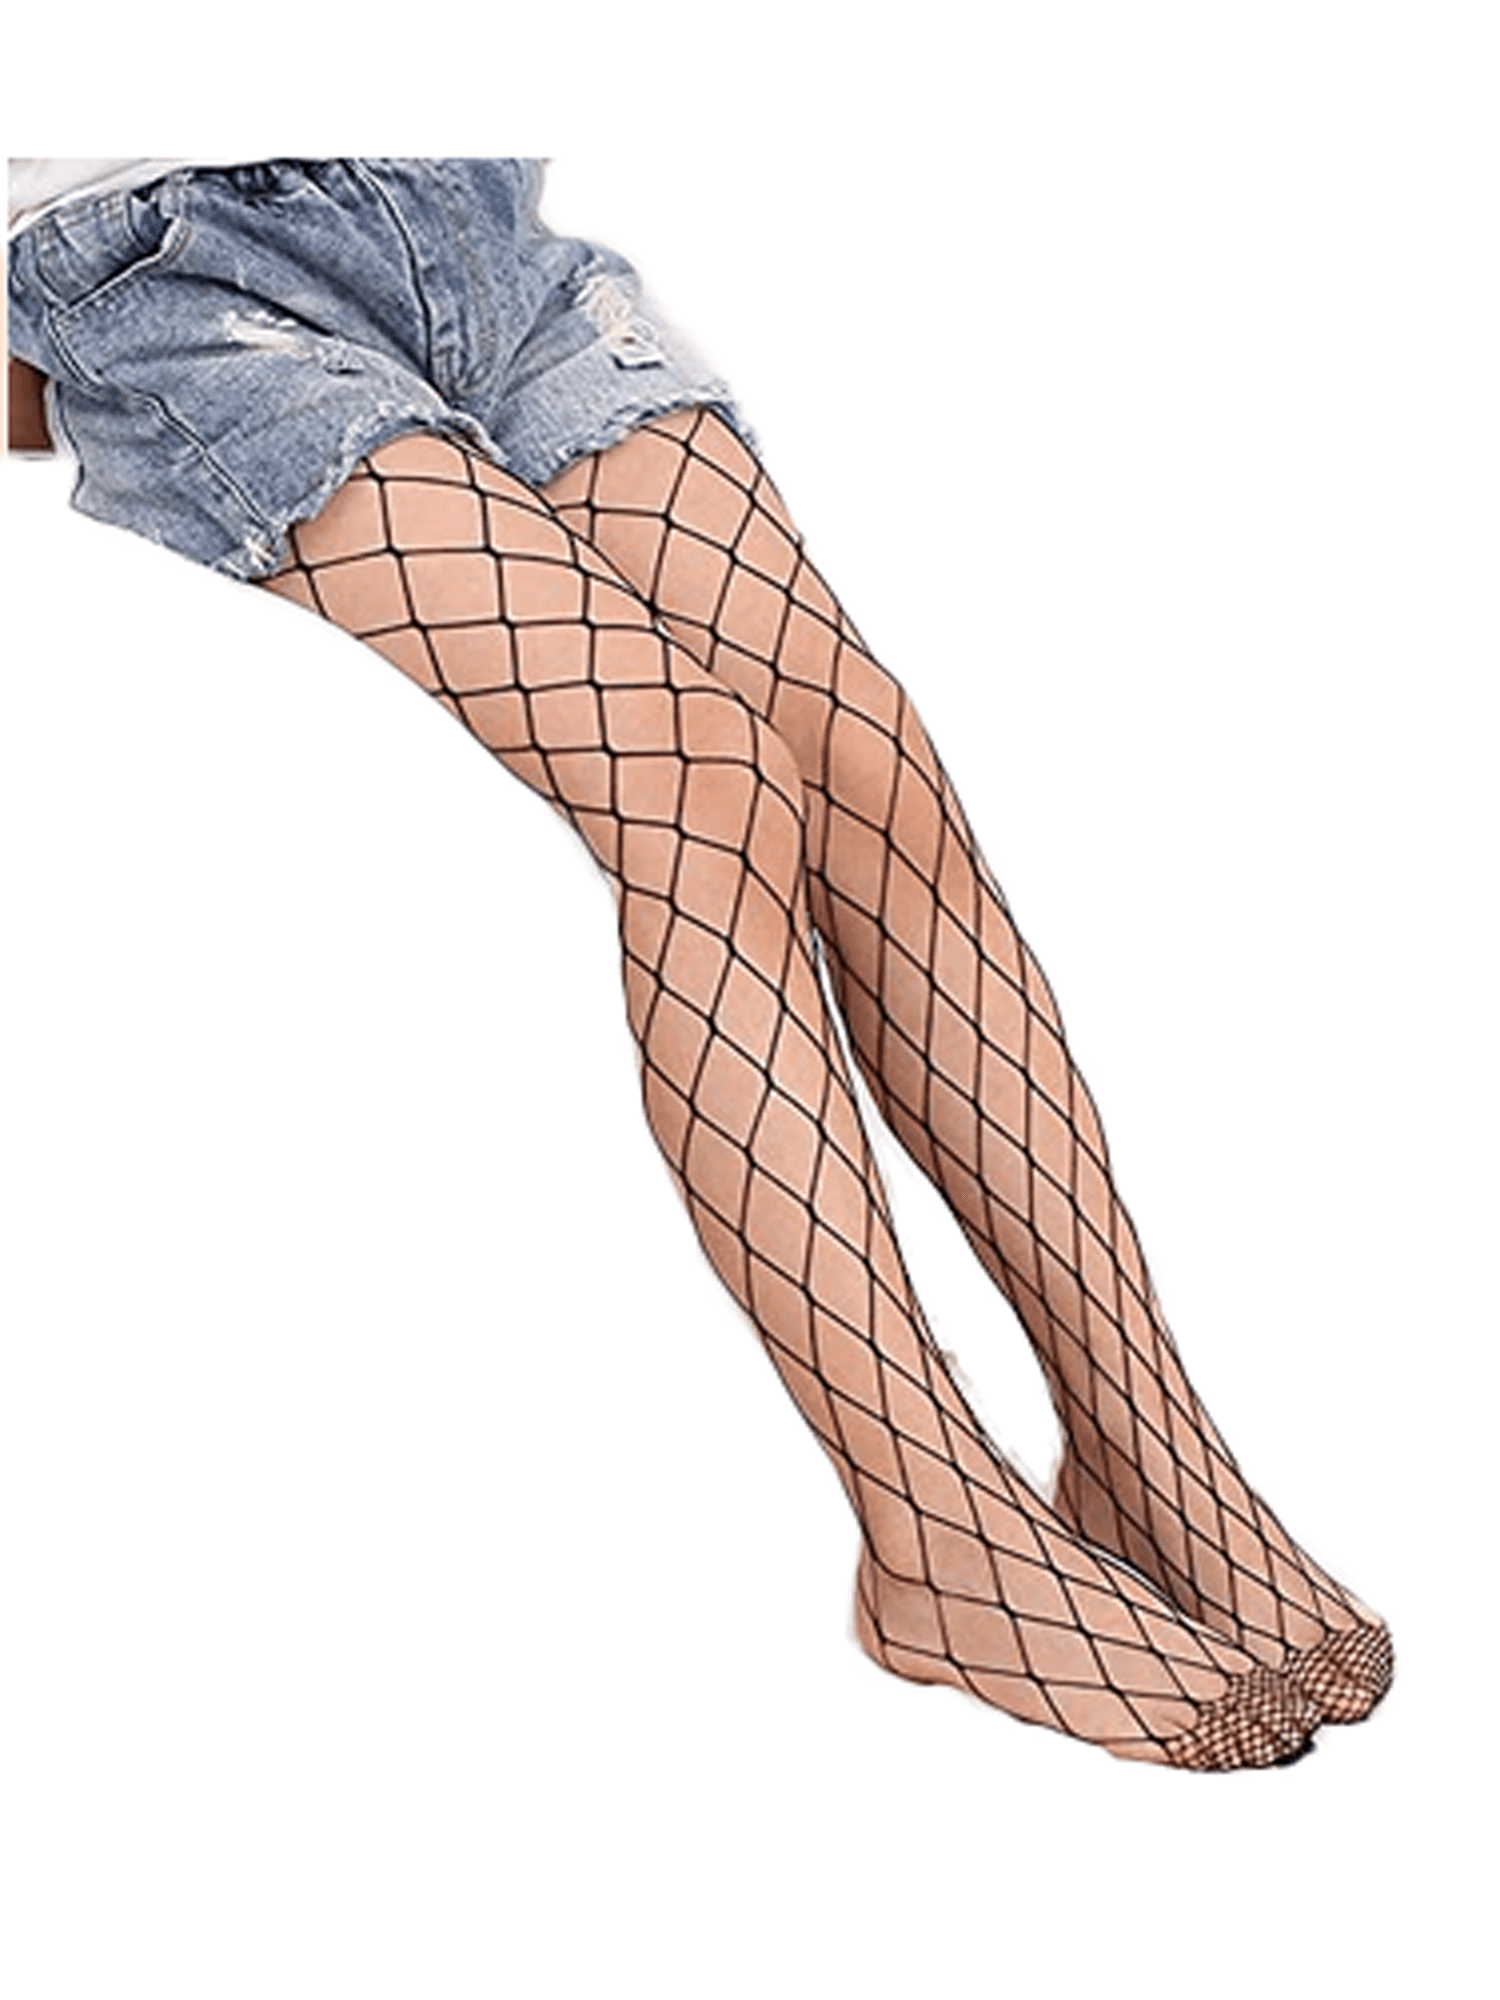 TOPGOD Children Little Girls Hollow Out Fishnet Pantyhose Tights Leggings 